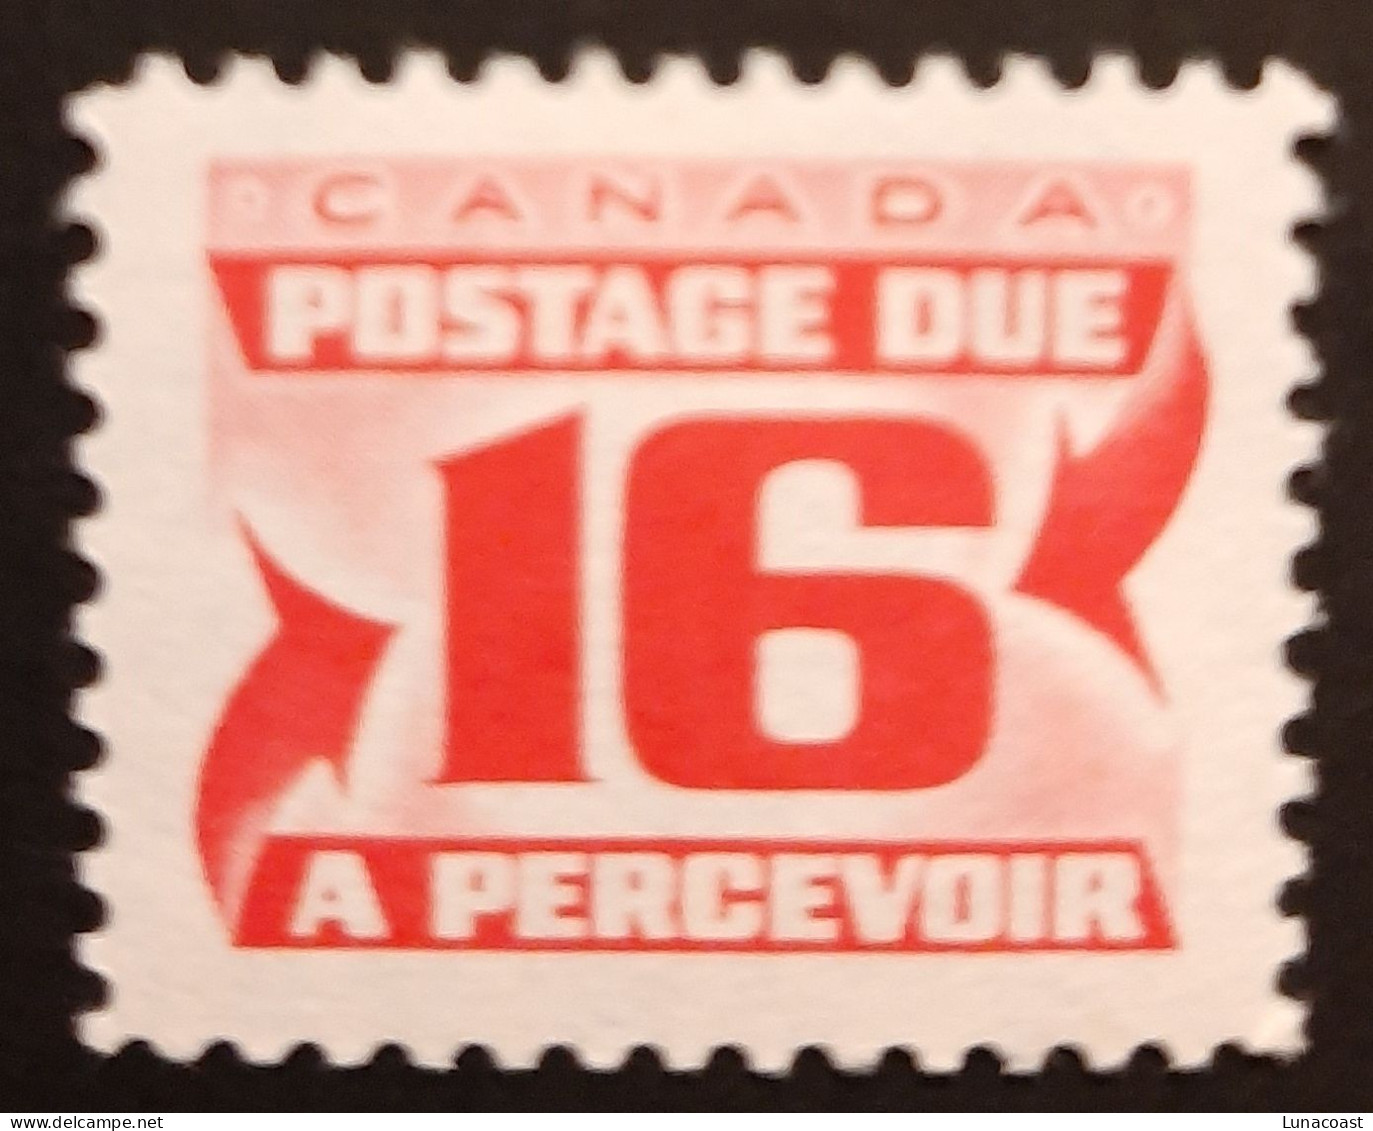 Canada 1973 MNH Sc #J37**   16c  Postage Due, Third Issue, Perf.12 - Ongebruikt